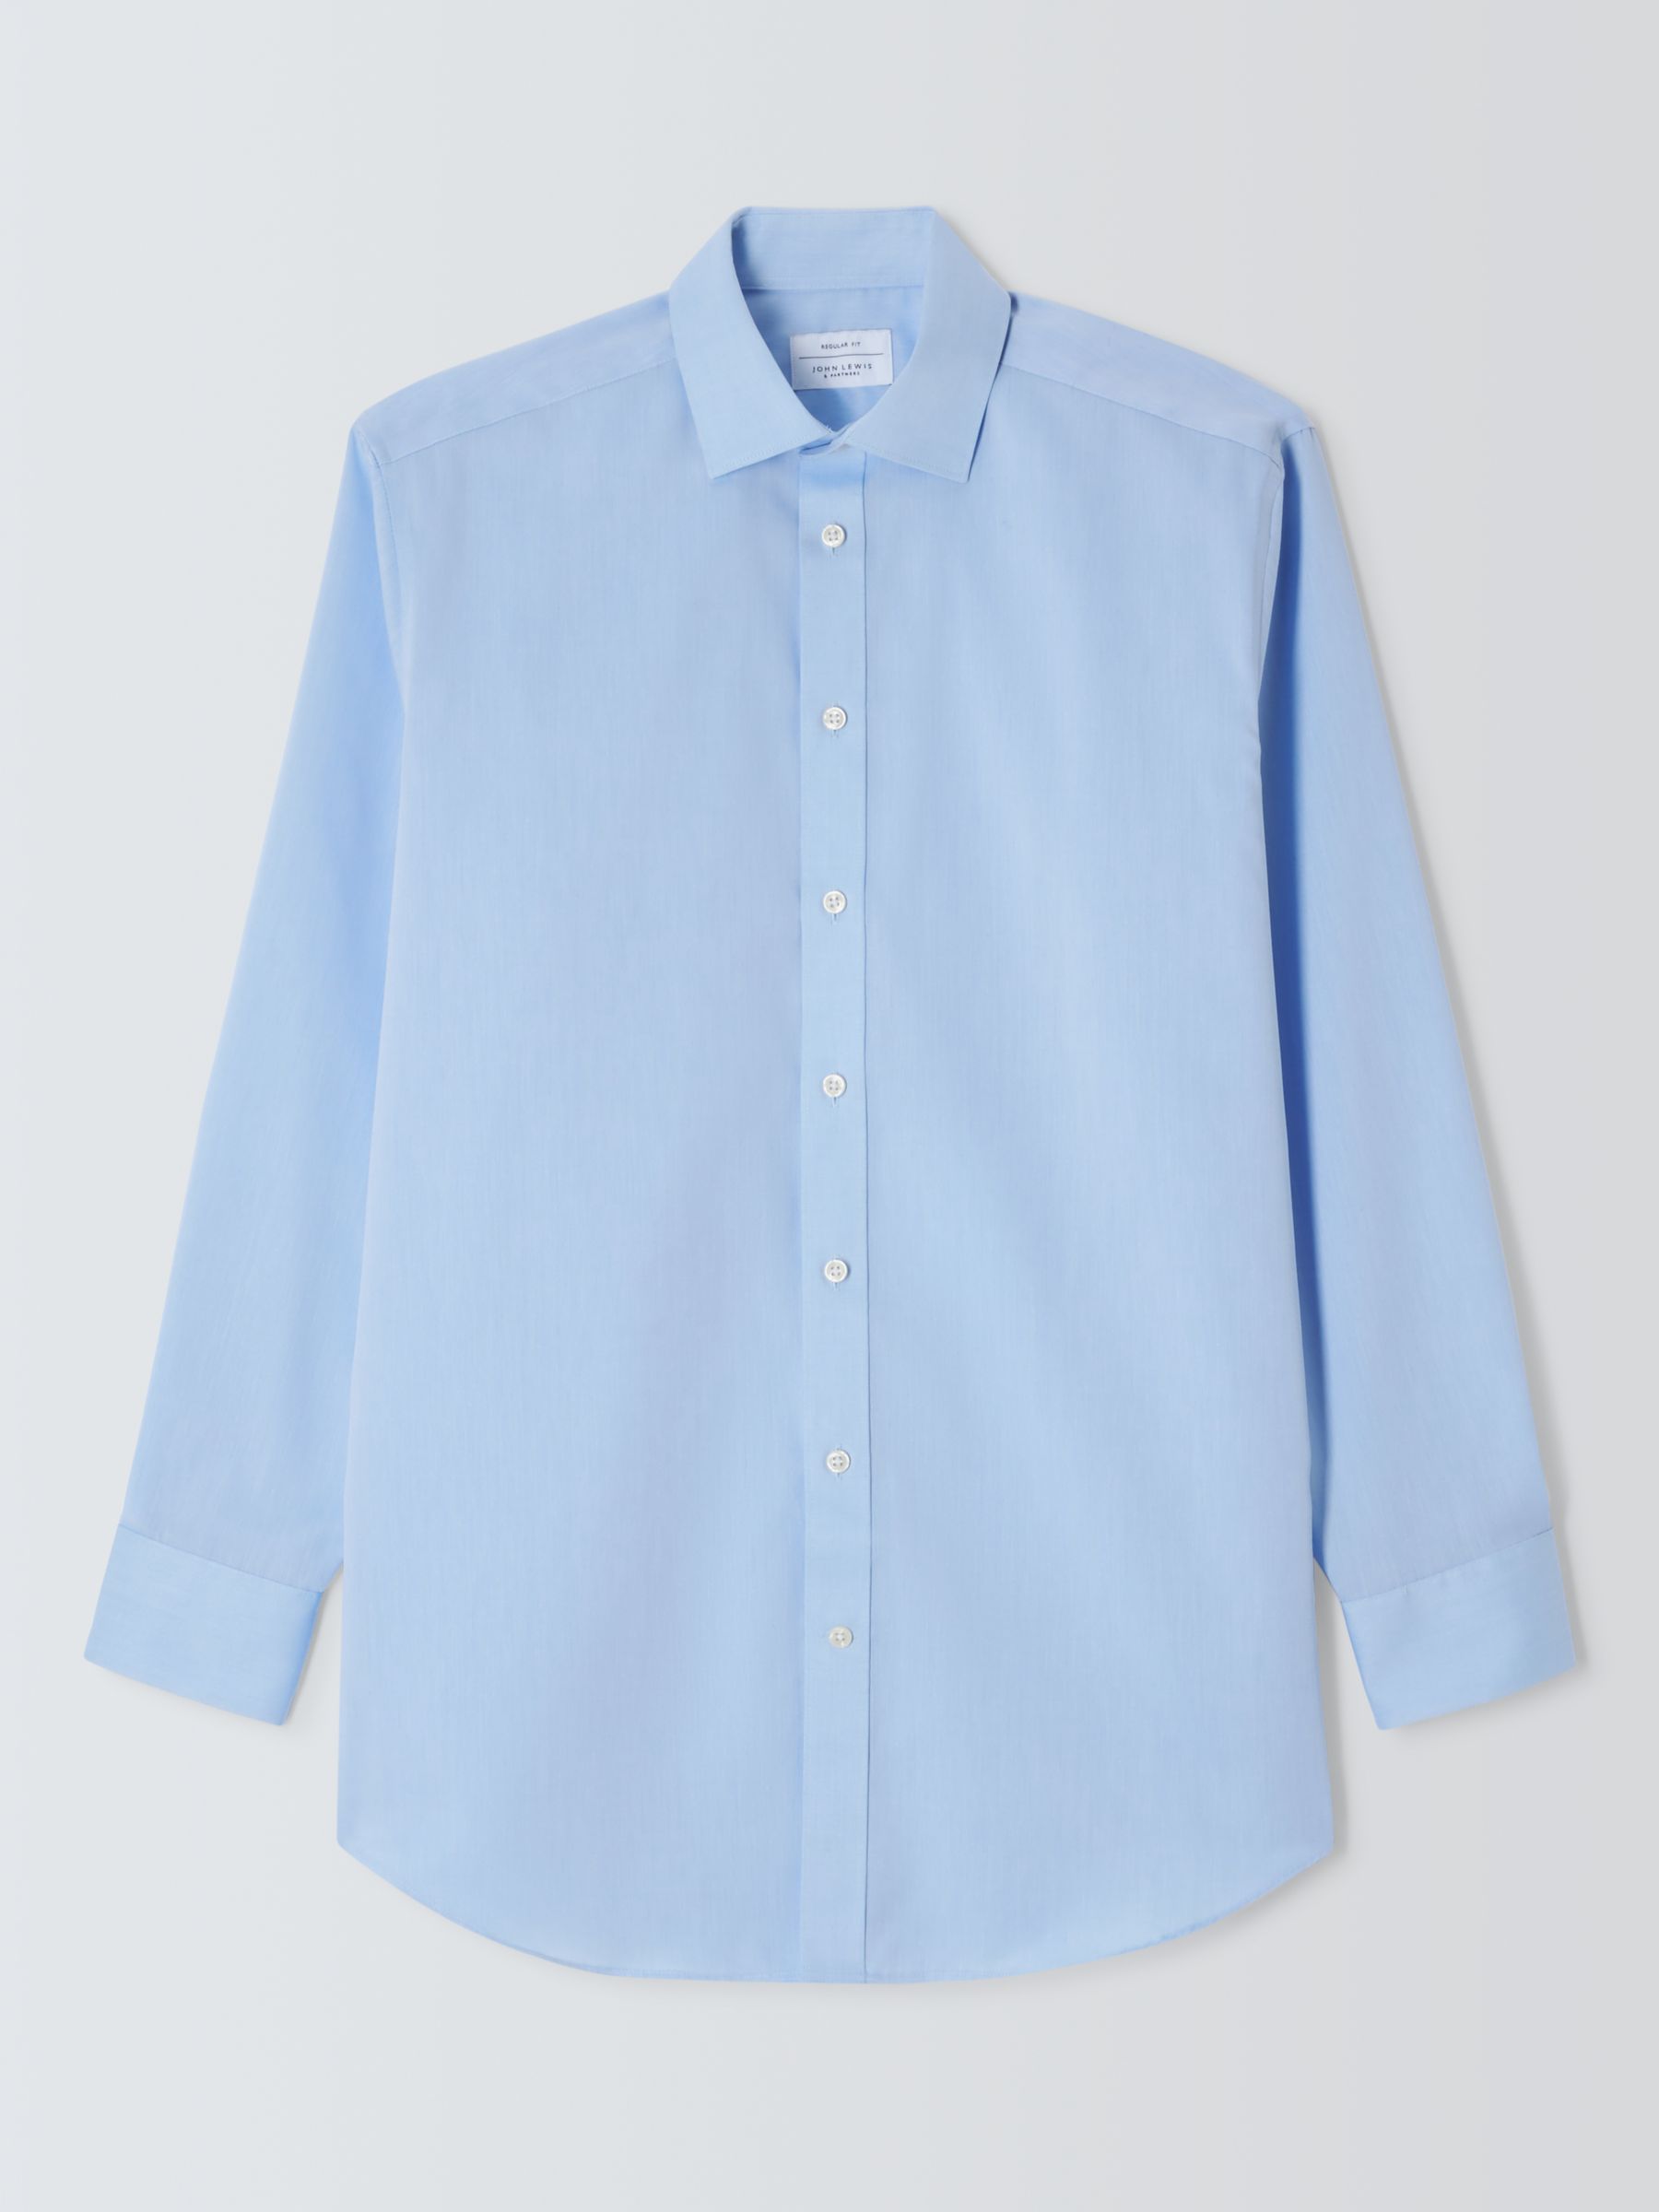 John Lewis Non Iron Twill Regular Fit Single Cuff Shirt, Blue, 15R